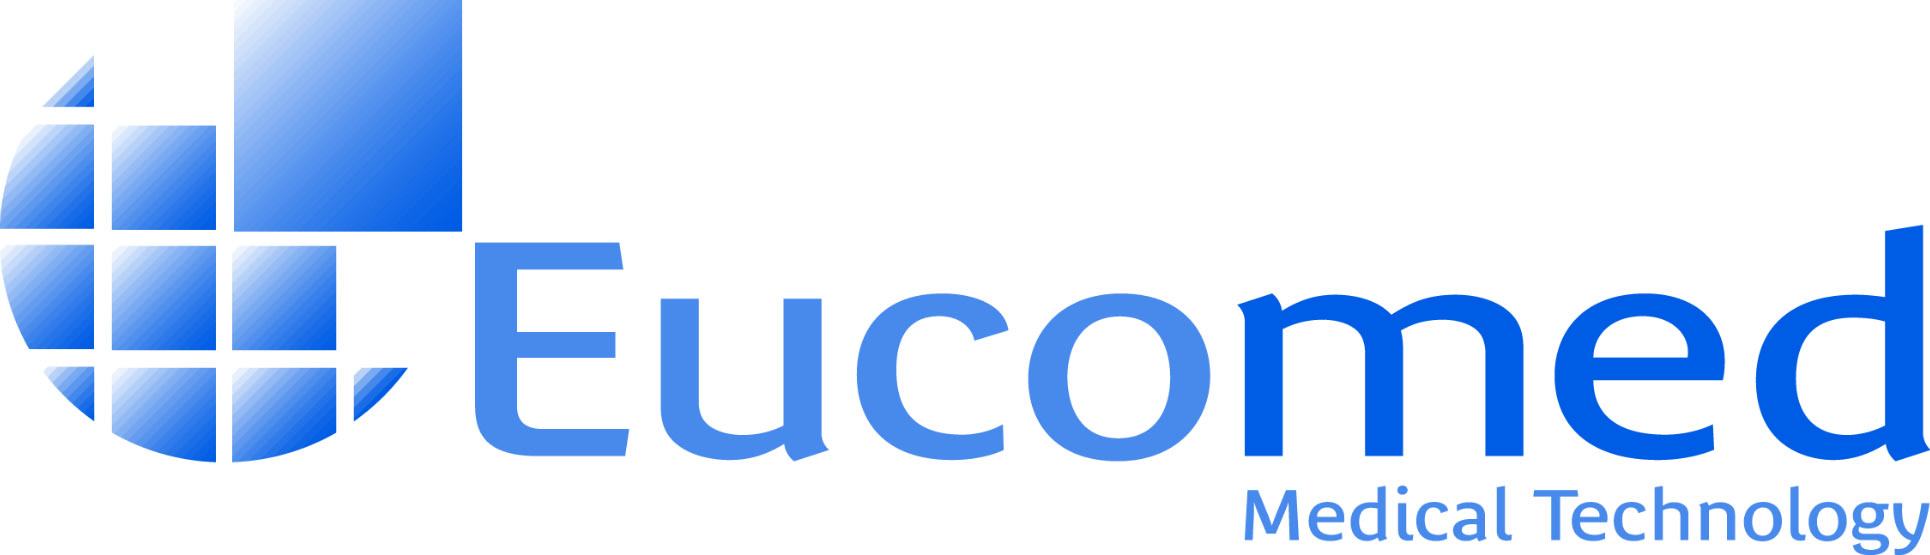 logo for EUCOMEDC